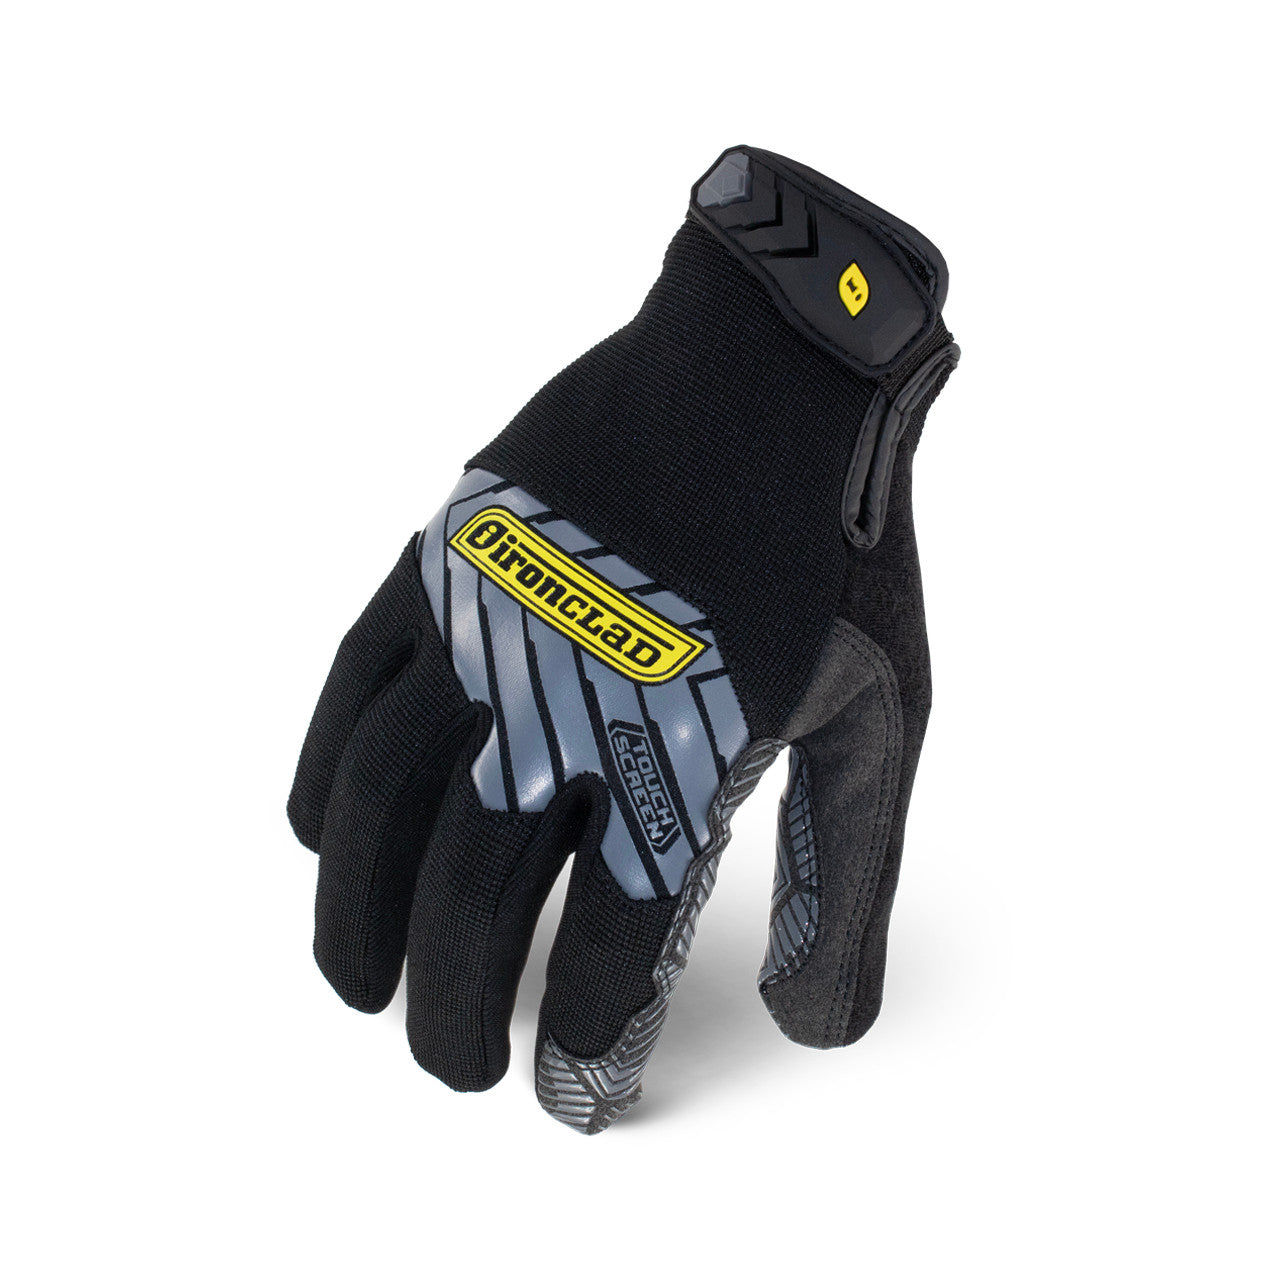 Ironclad Command™ Grip Glove Black-eSafety Supplies, Inc